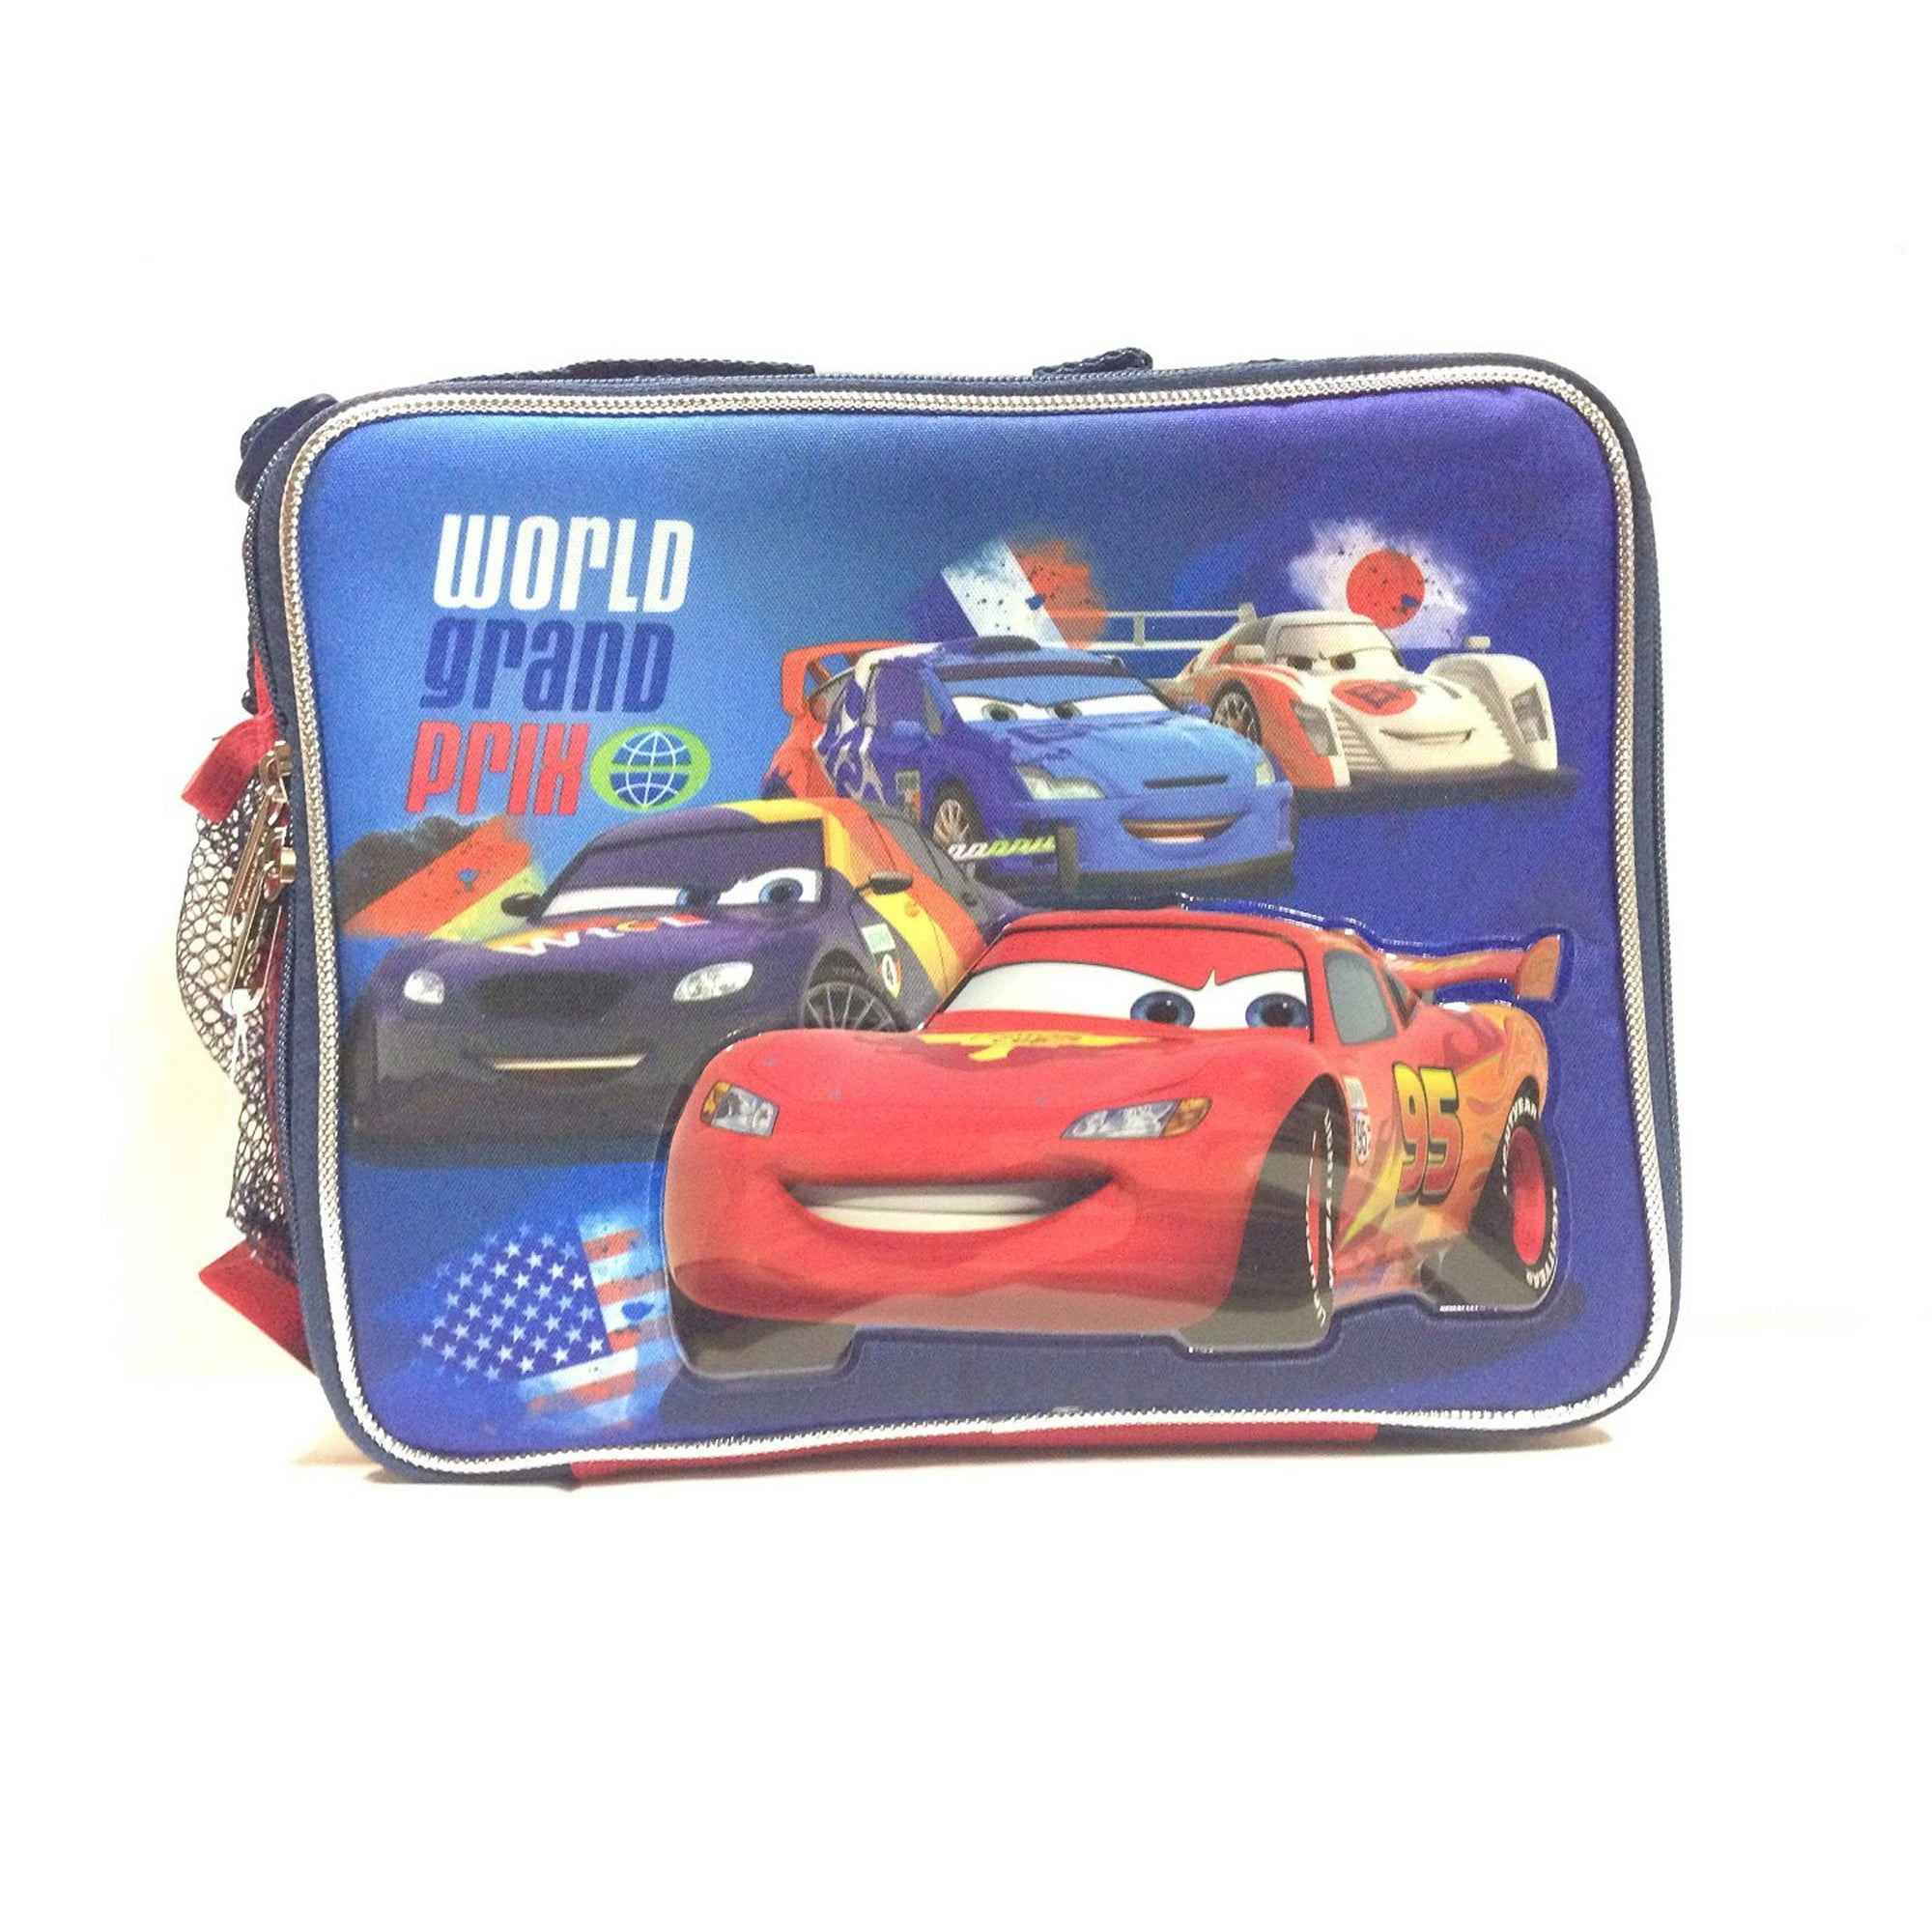 Lunch Bag Disney Cars 2 World Grand Prix Girls Gifts Toys New Case Walmart Canada